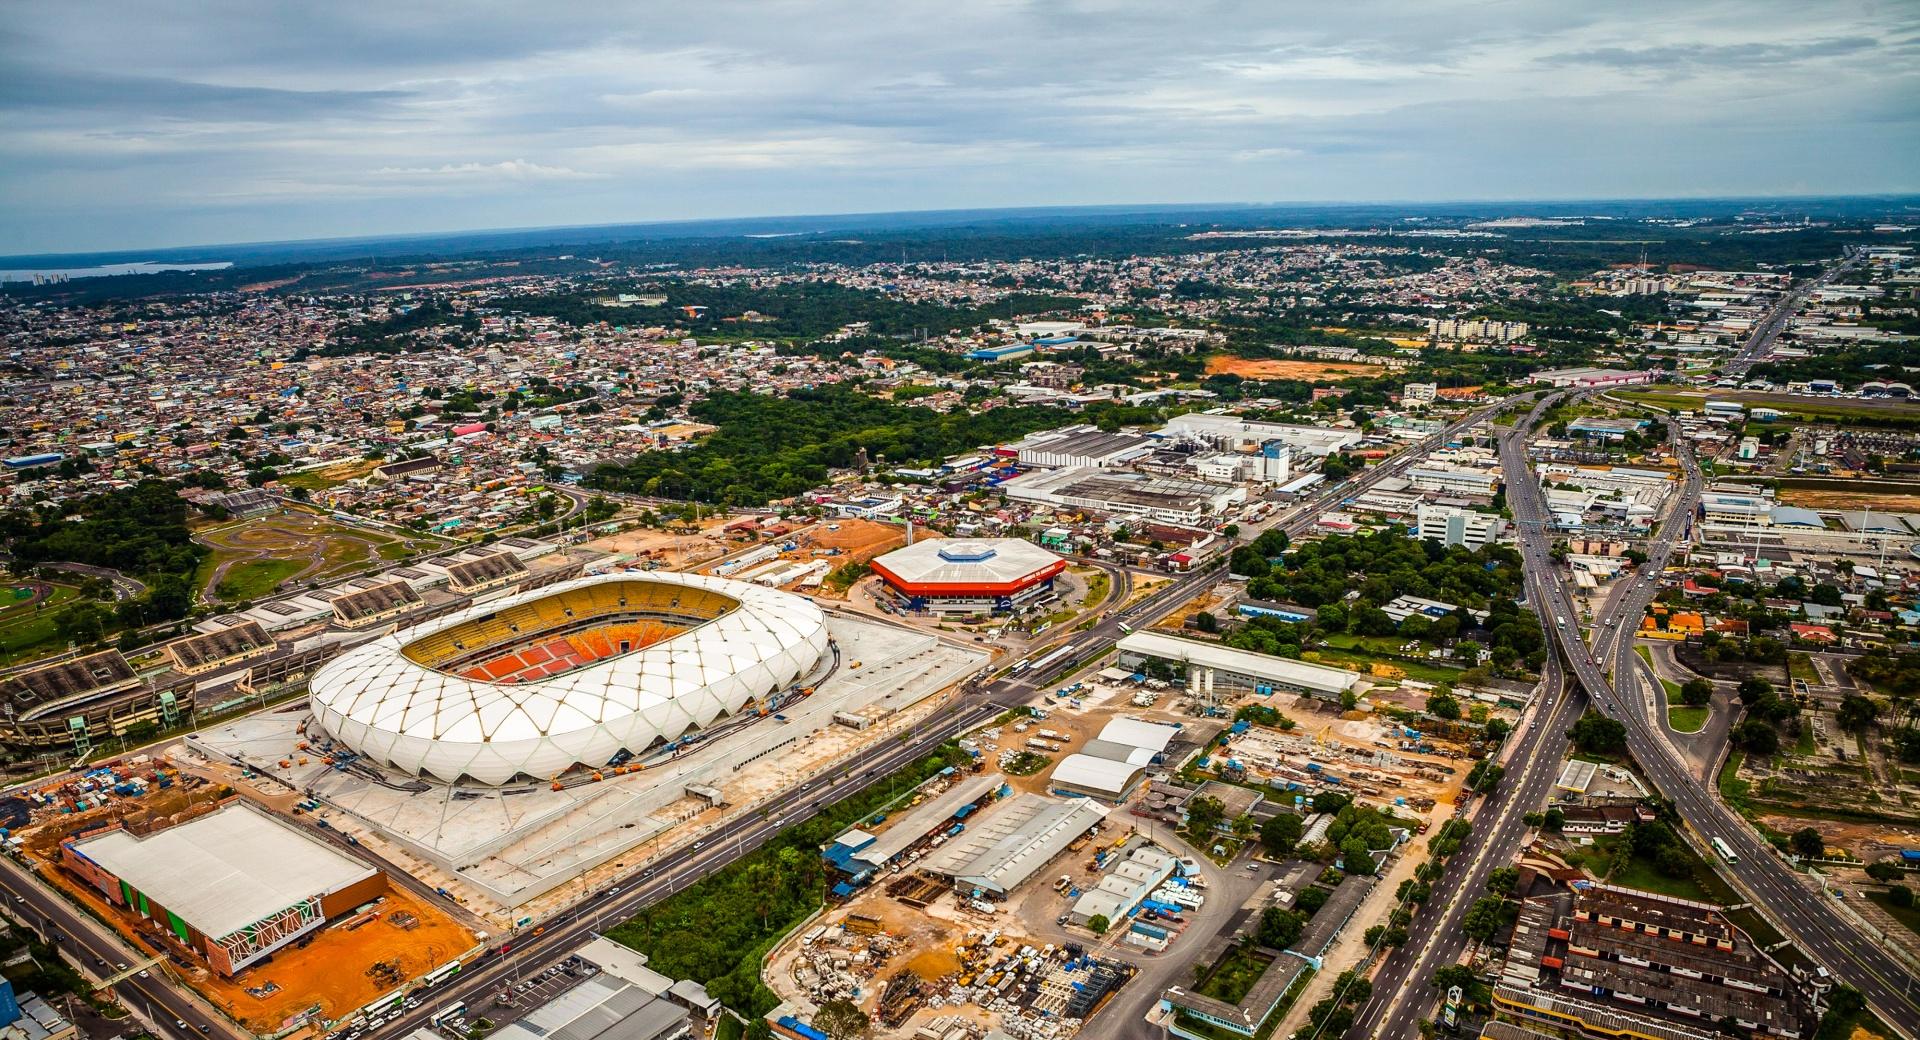 Brazil Stadiums 2014 at 2048 x 2048 iPad size wallpapers HD quality